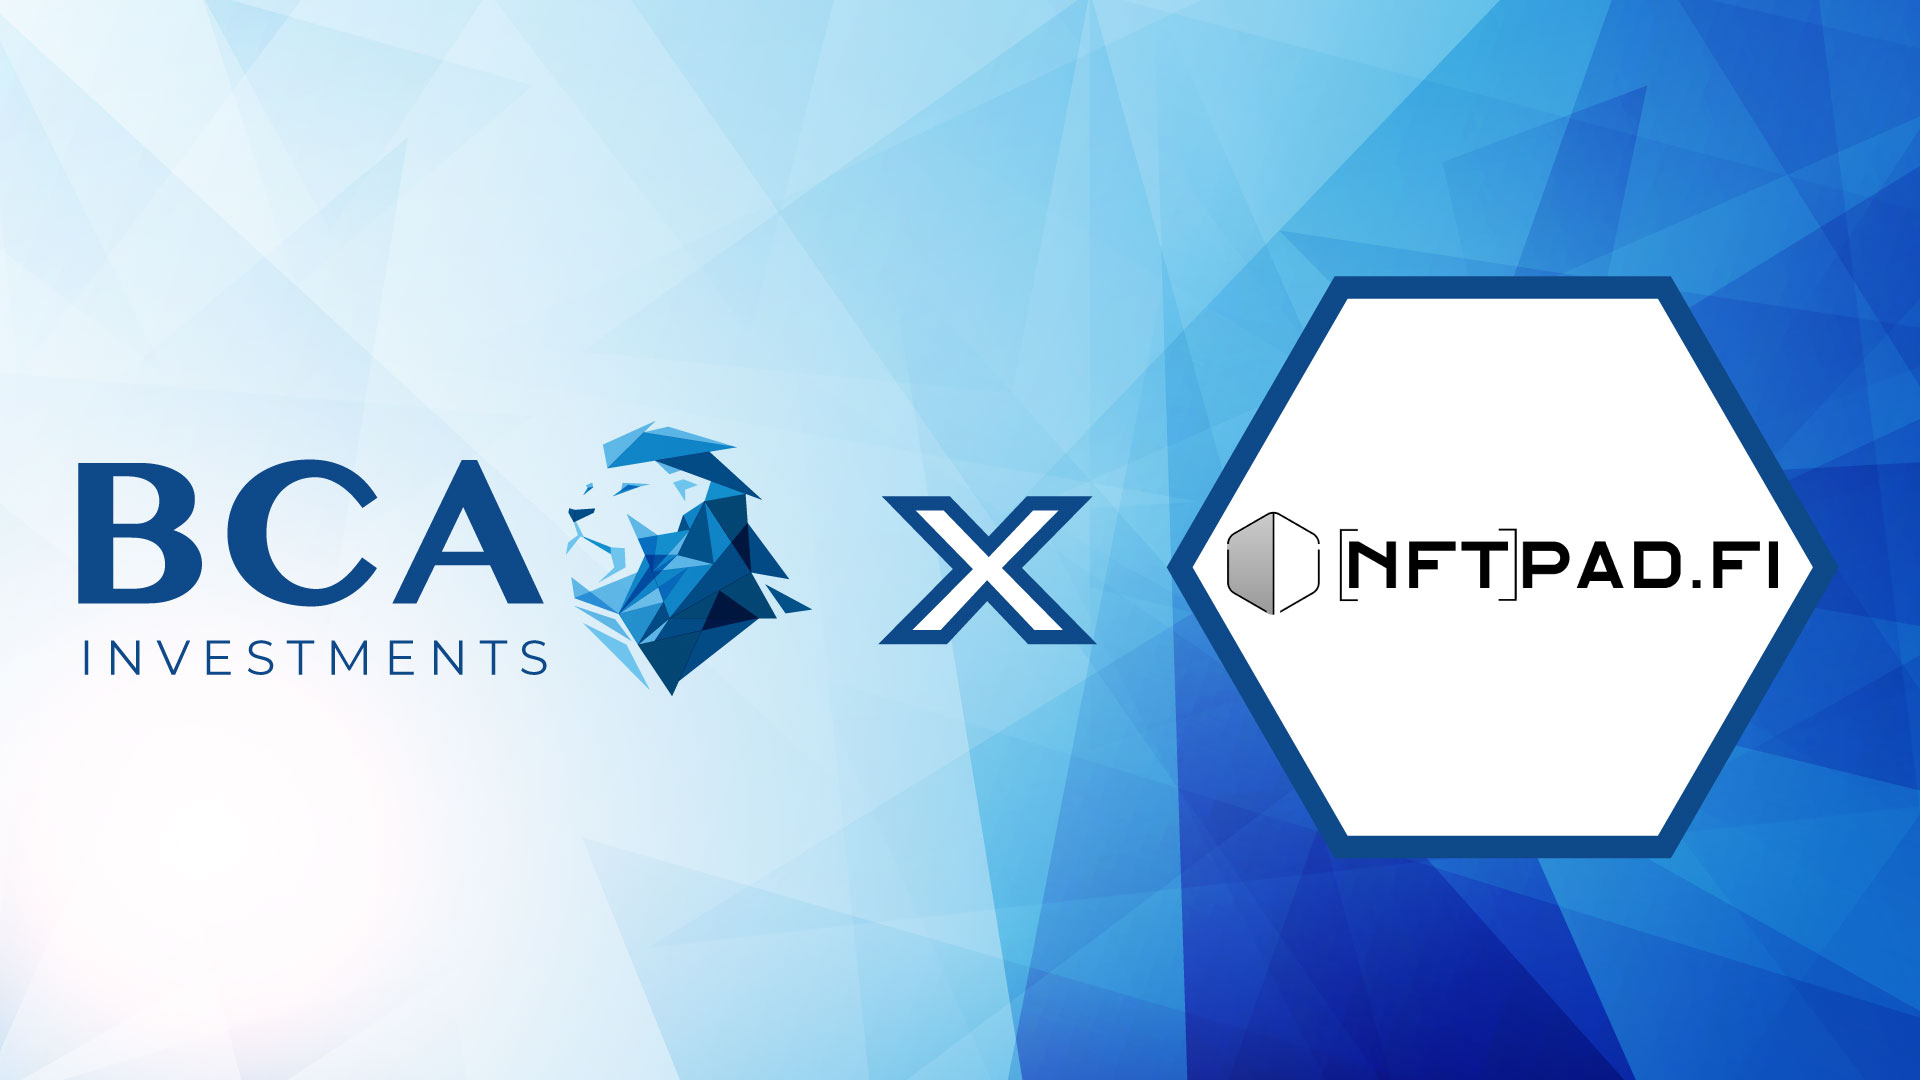 NFTpad & BCAi are official partners